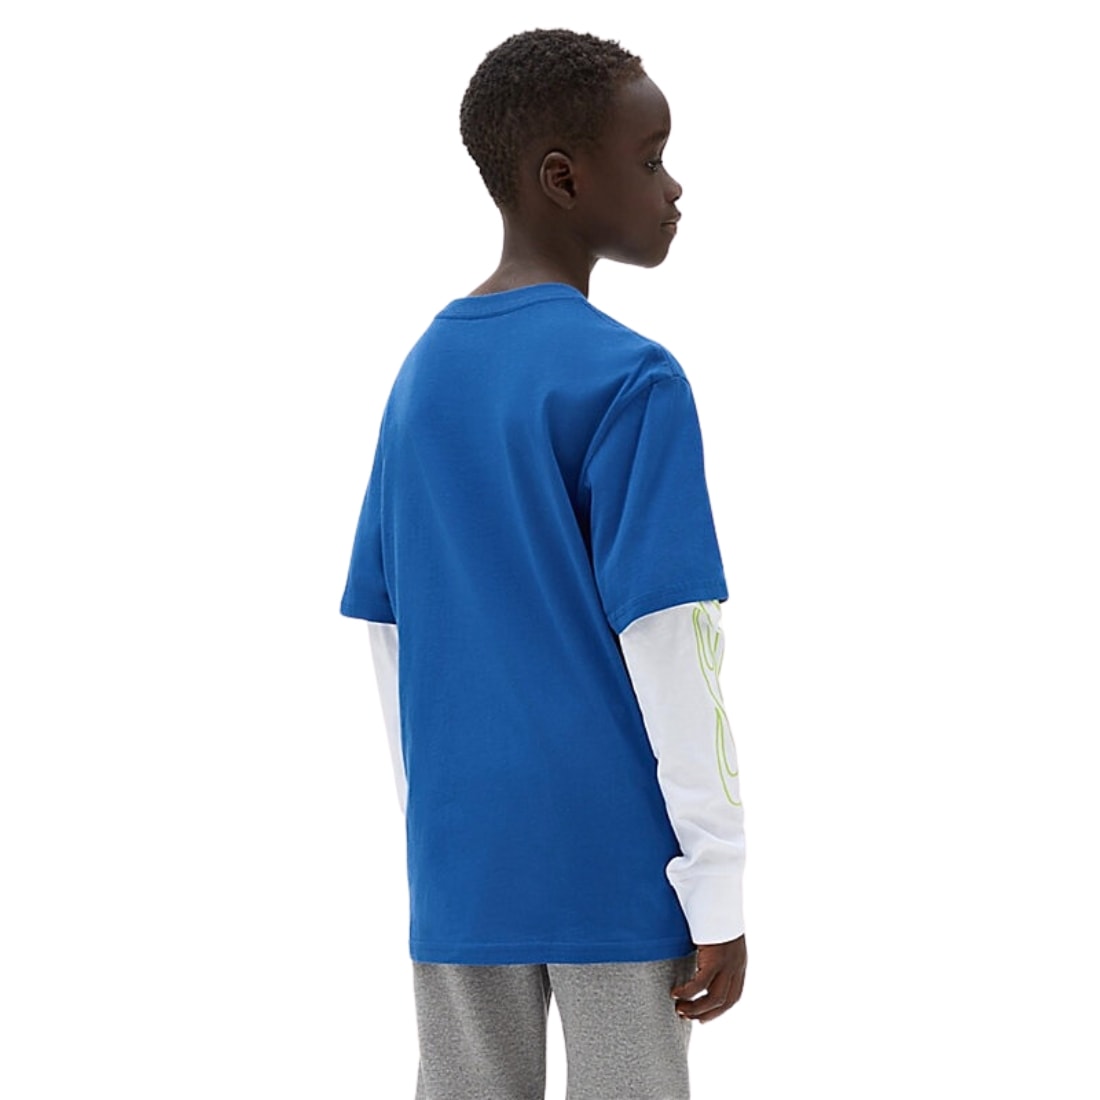 Vans Kids Neon Flames Twofer Longsleeve T-Shirt - True Blue - Boys Skate Brand T-Shirt by Vans